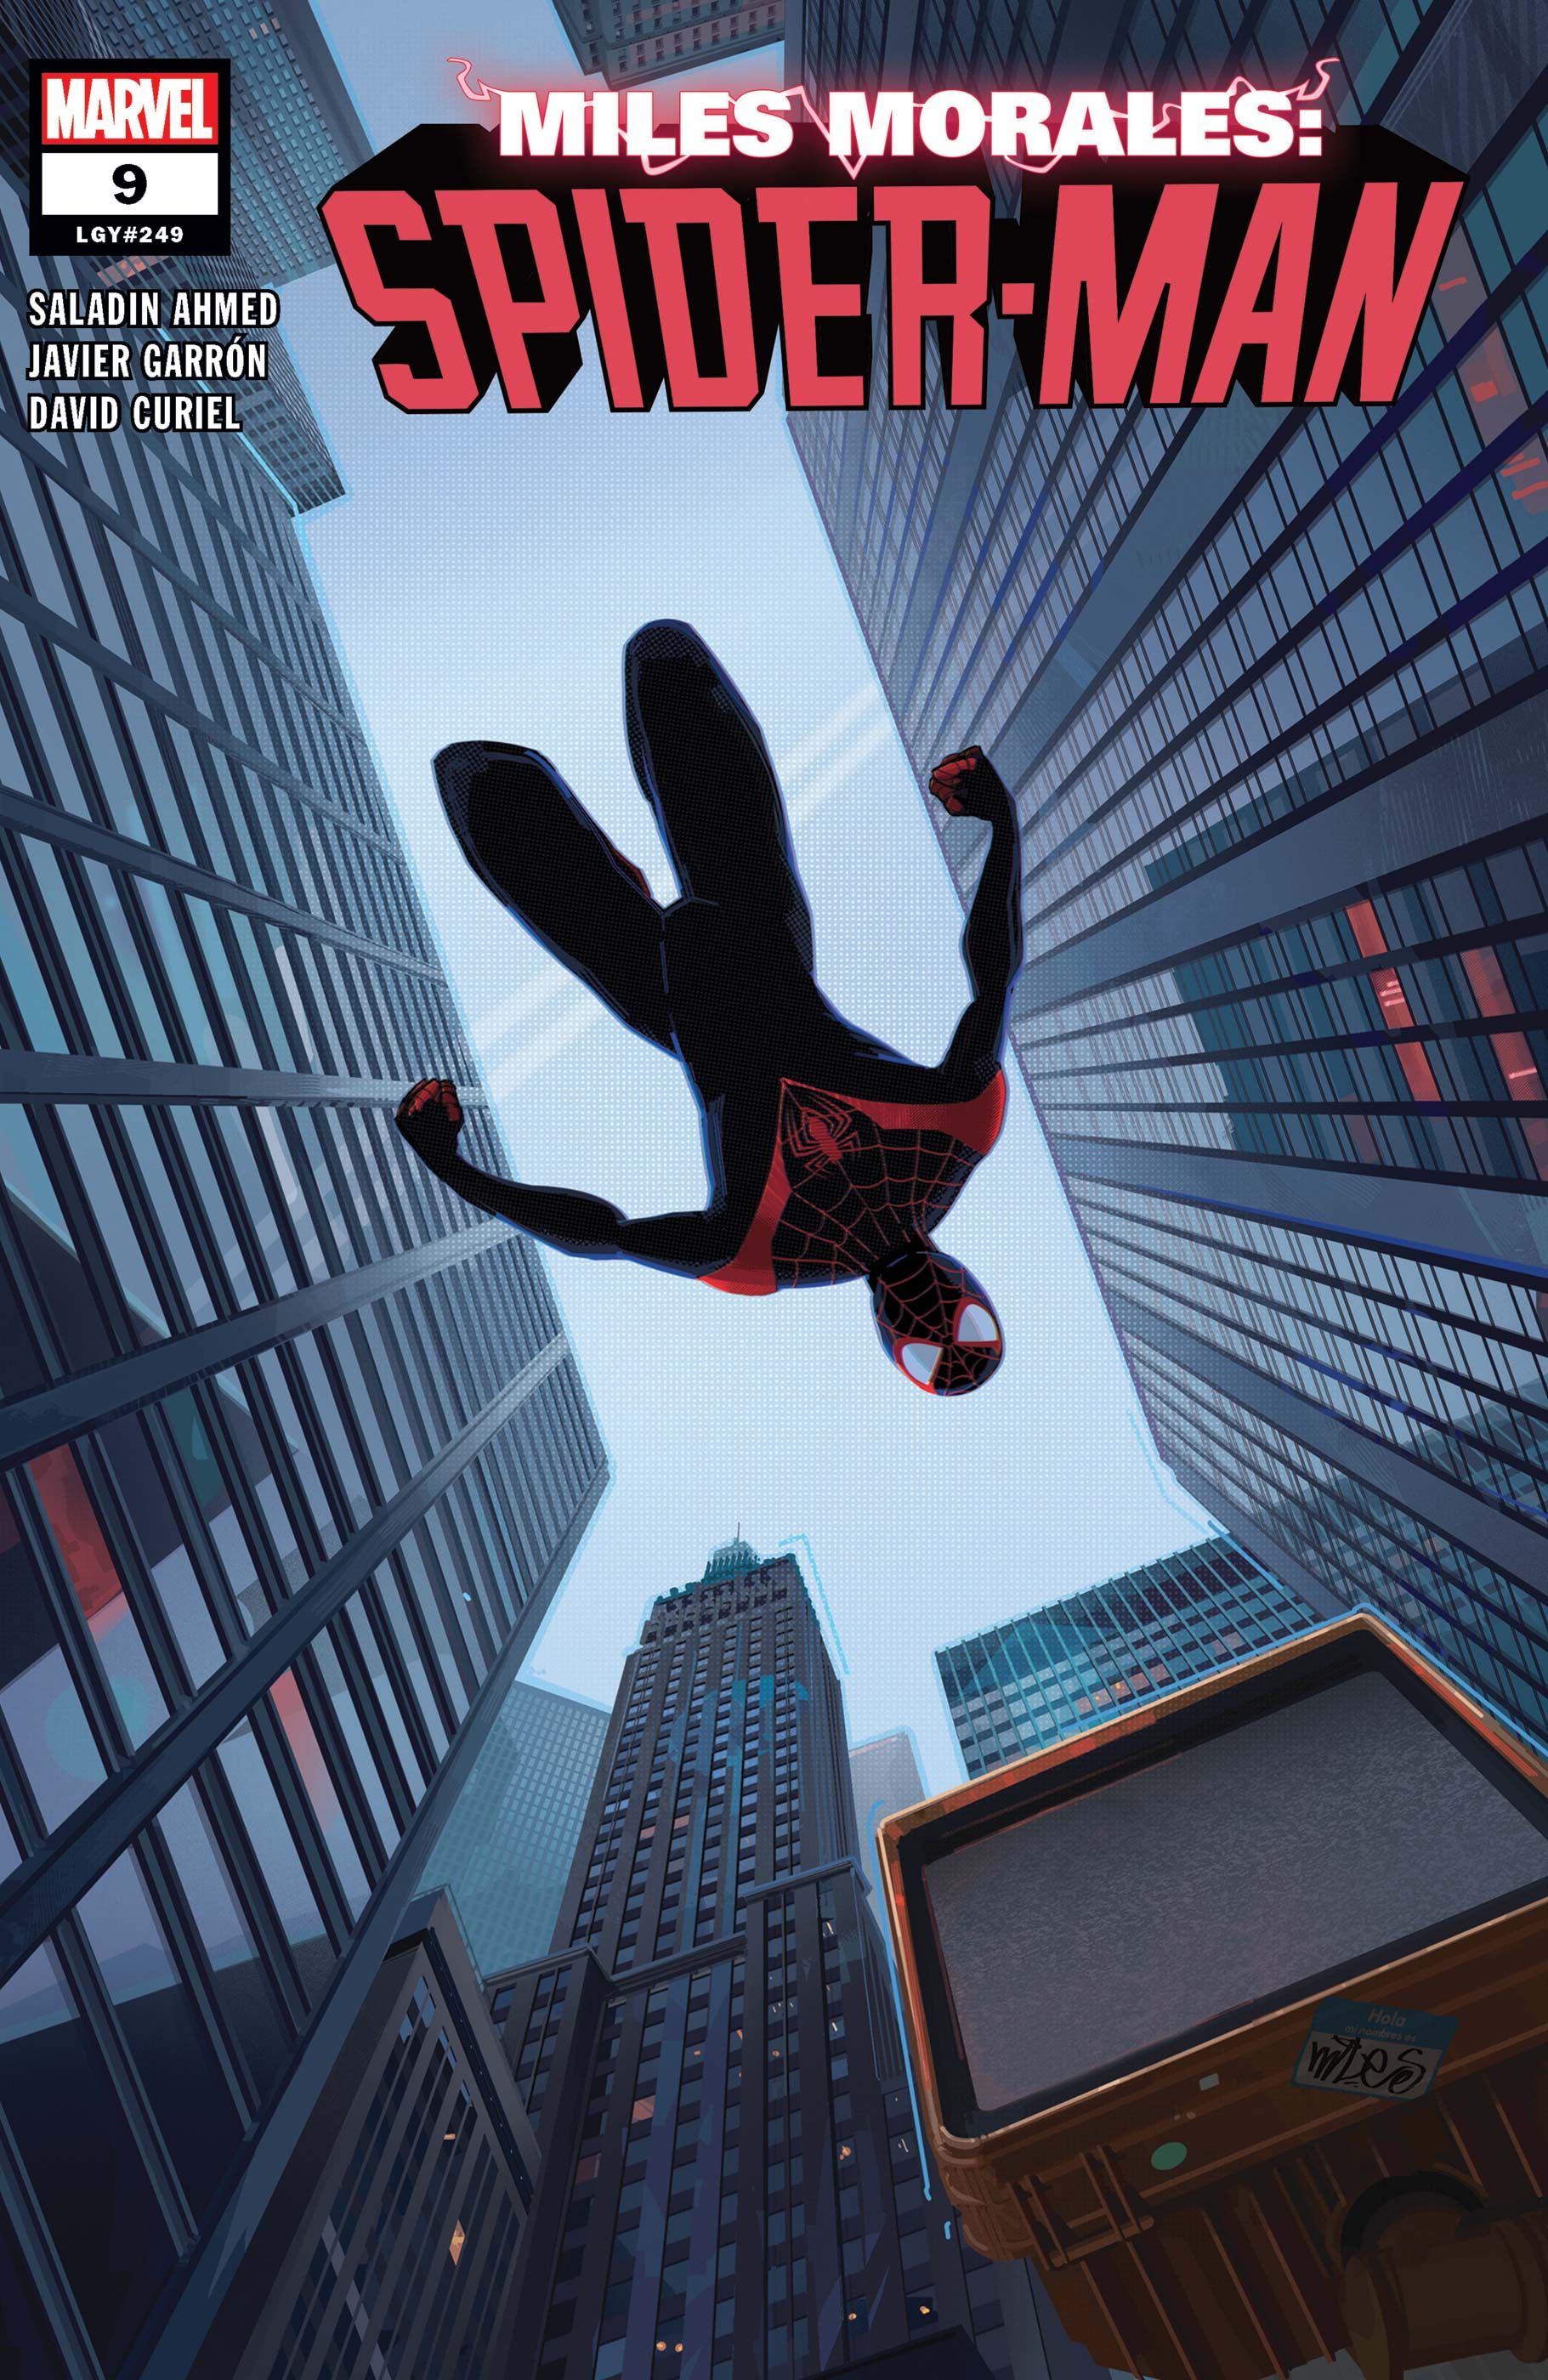 Marvel Removed Black Lives Matter Logo From Miles Morales: Spider-Man Cover